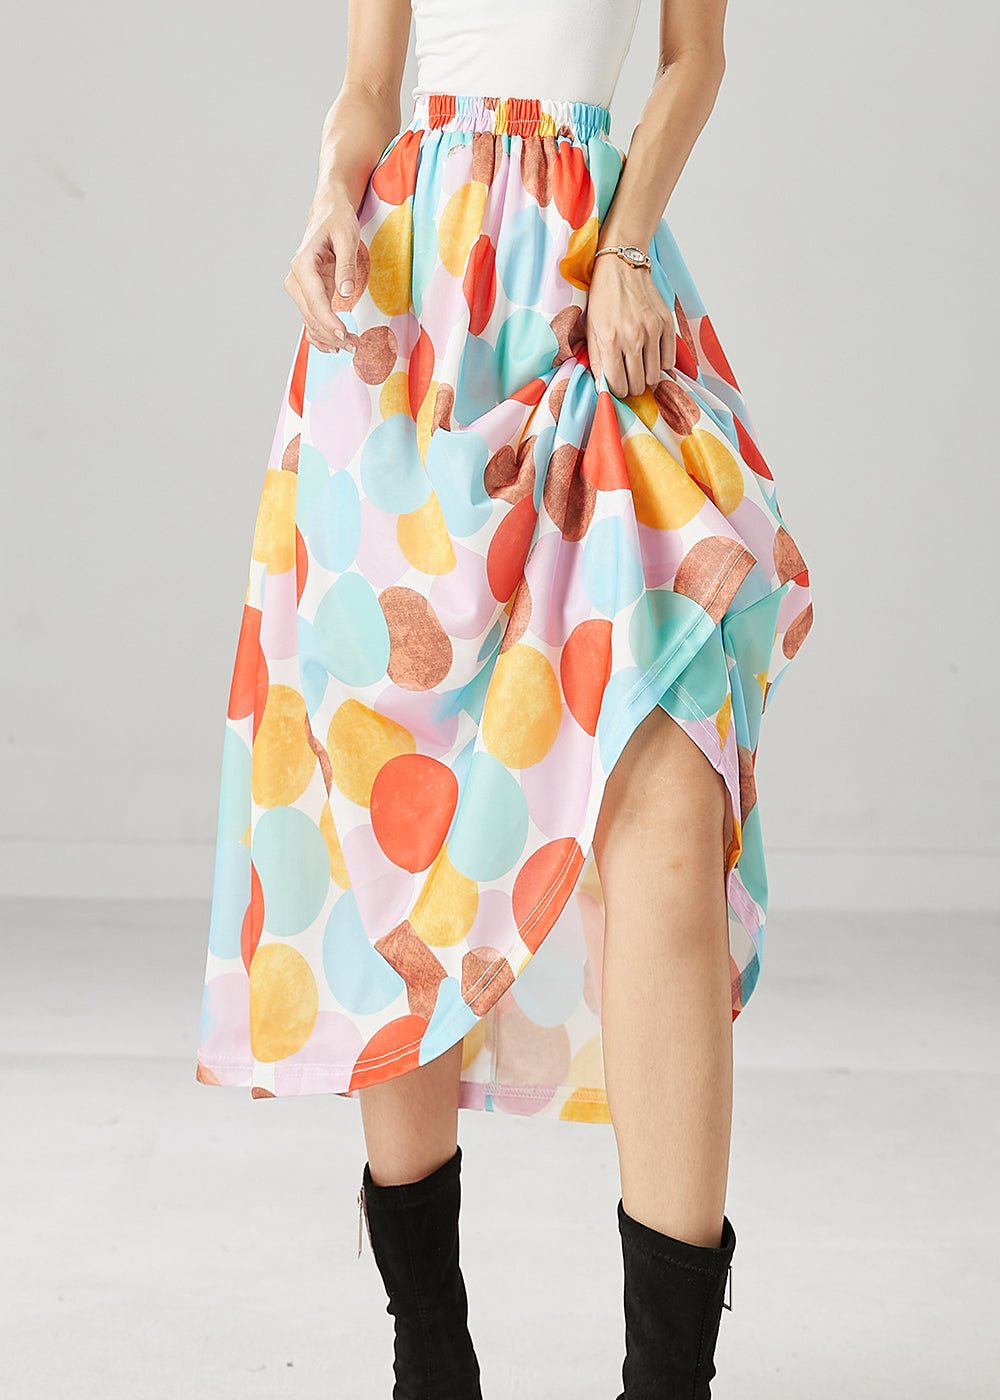 Stylish Rainbow Print Elastic Waist Cotton Skirt Spring